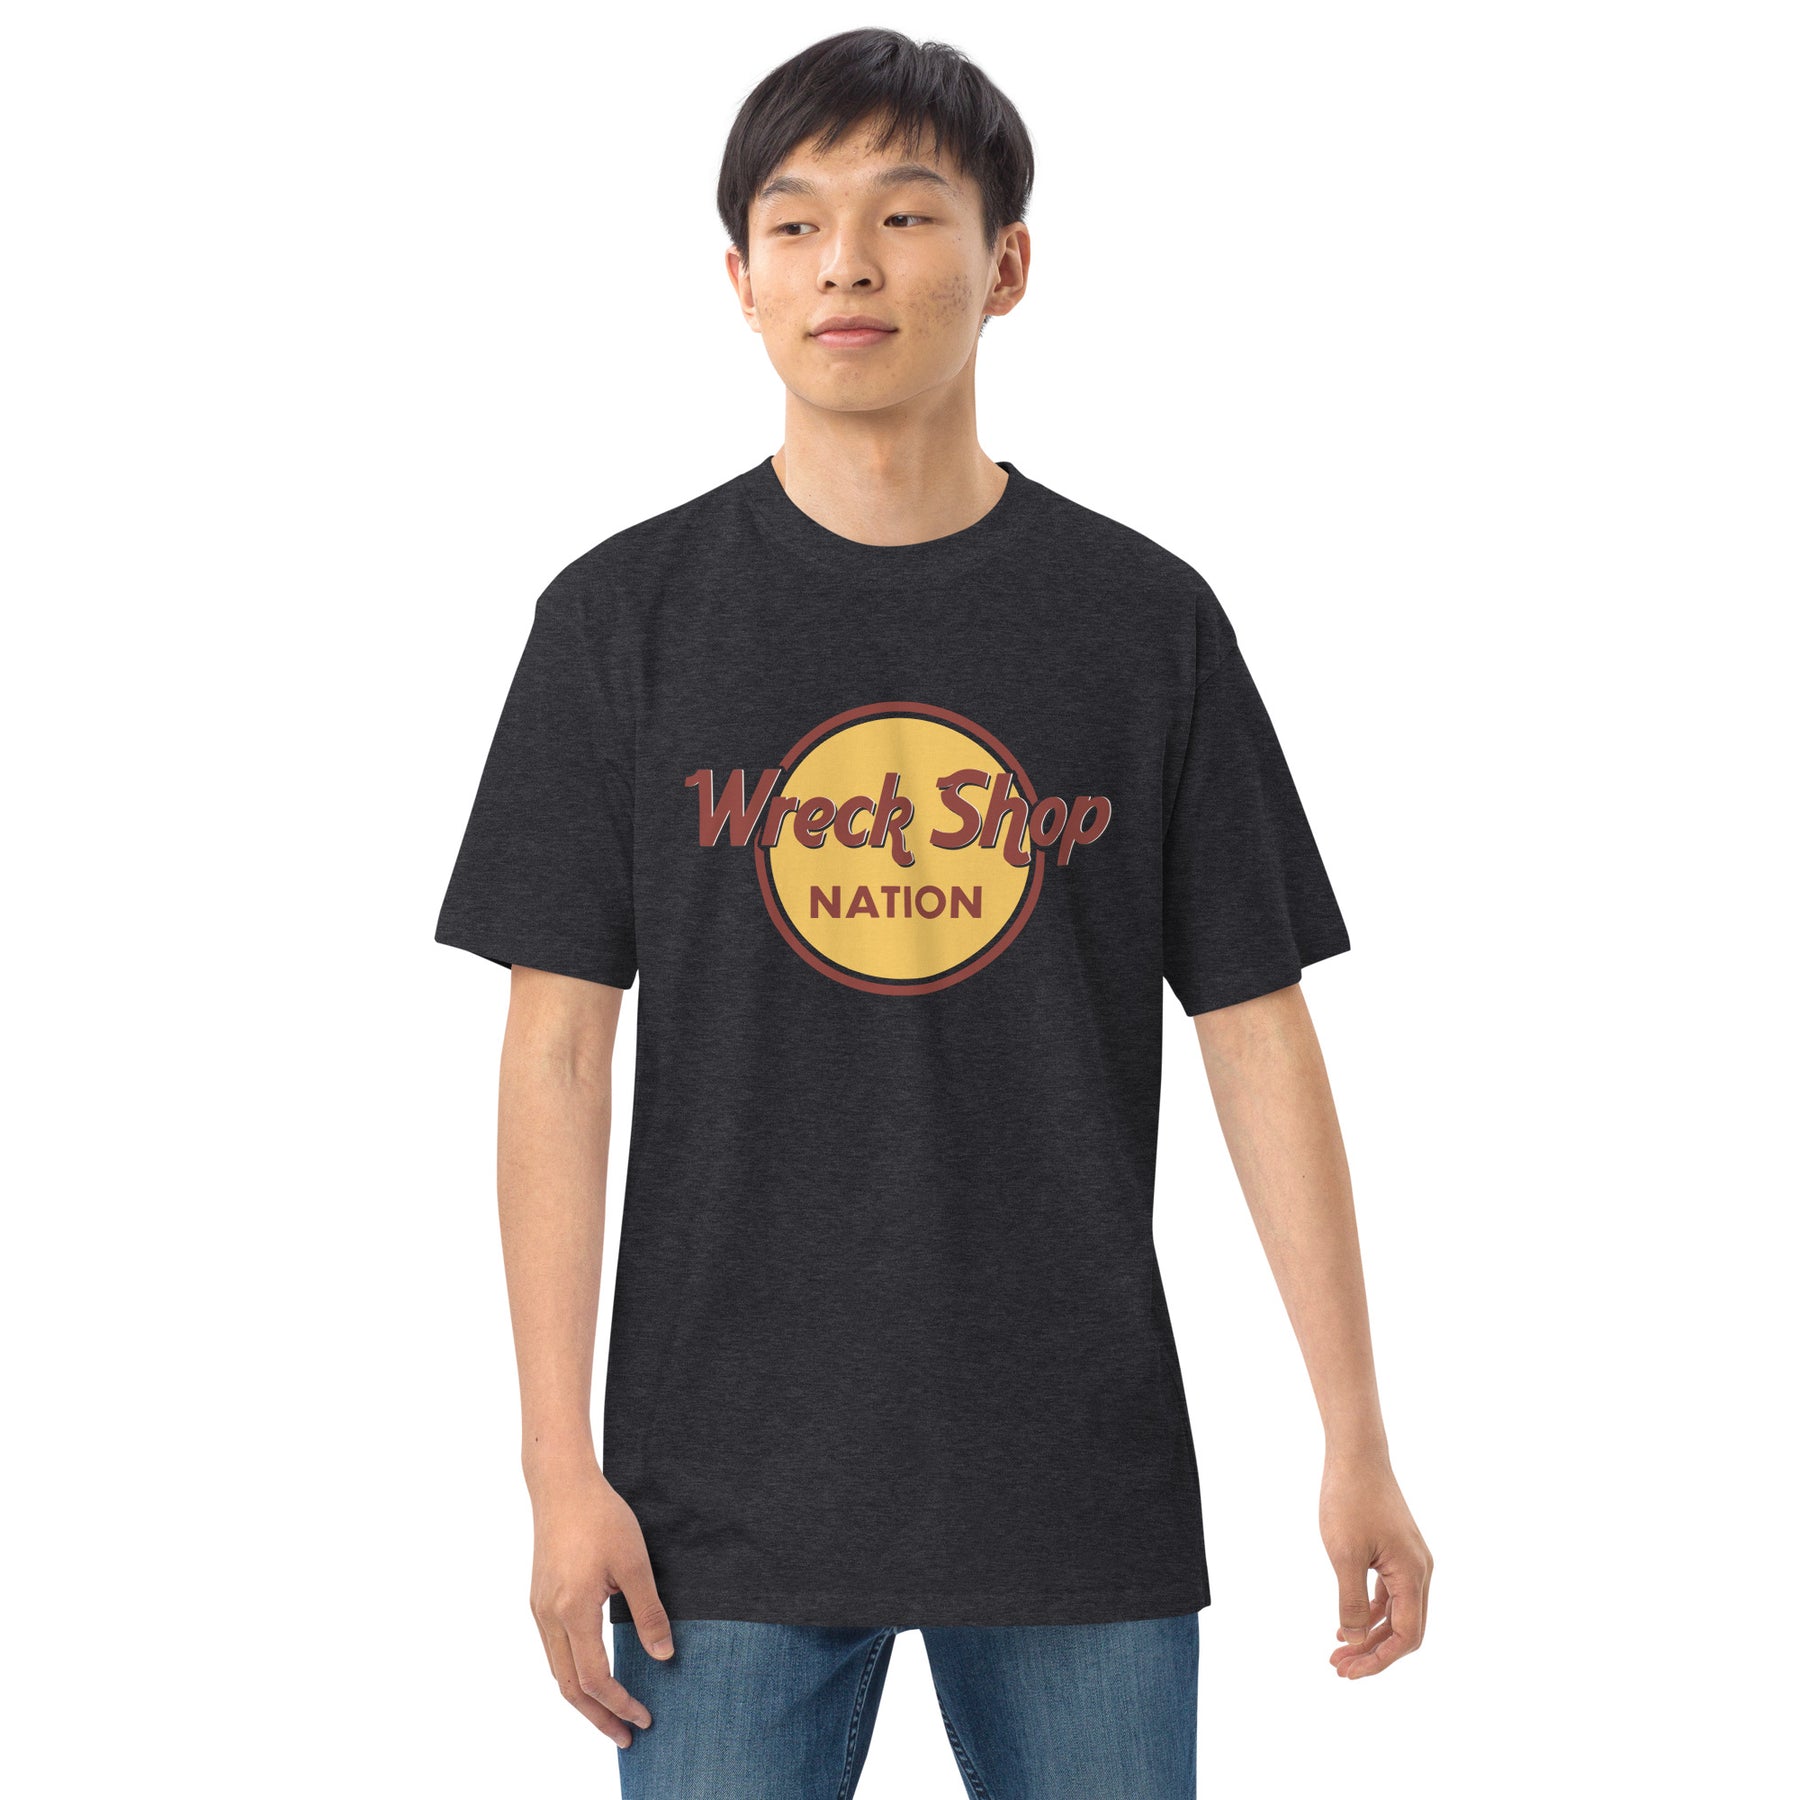 Wreckshop "Hard Rock Cafe" Men’s premium heavyweight tee